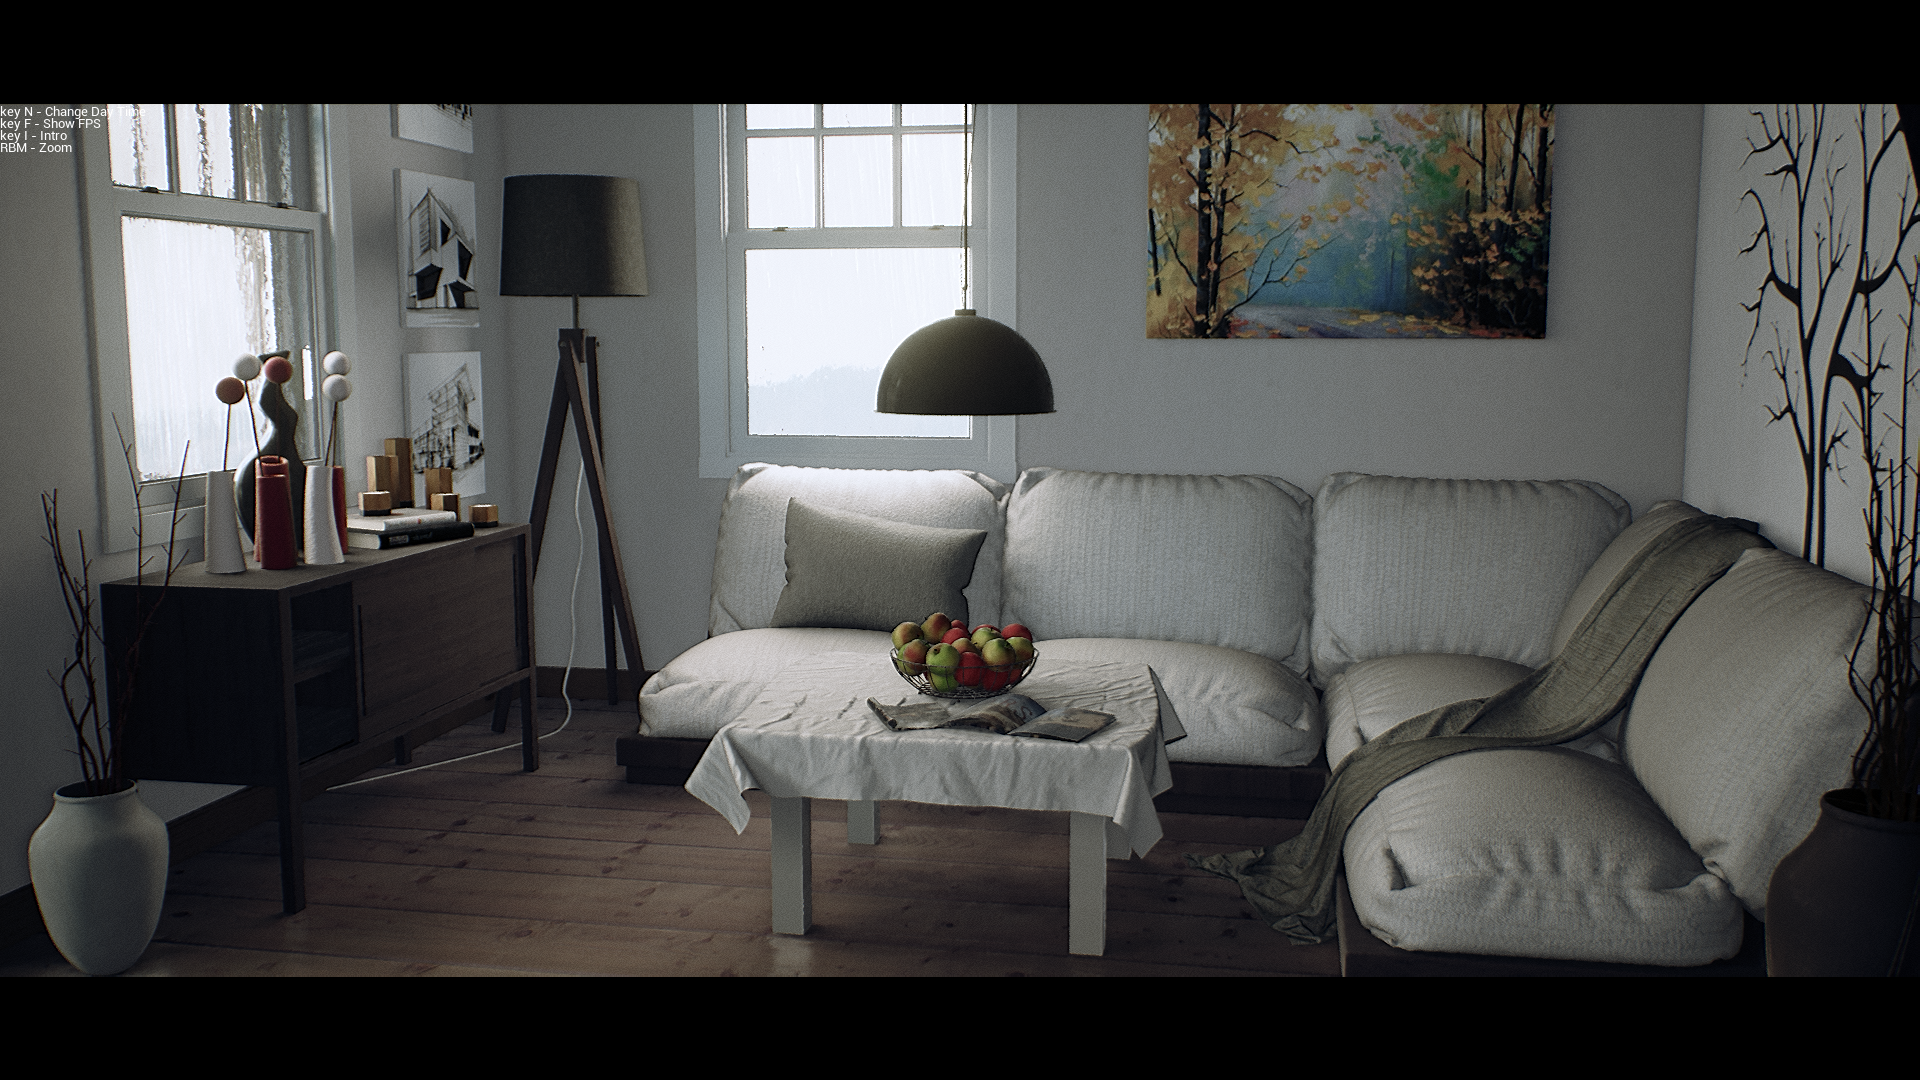 Unreal Engine 4 Archviz Render Interior Room Digital Art 1920x1080